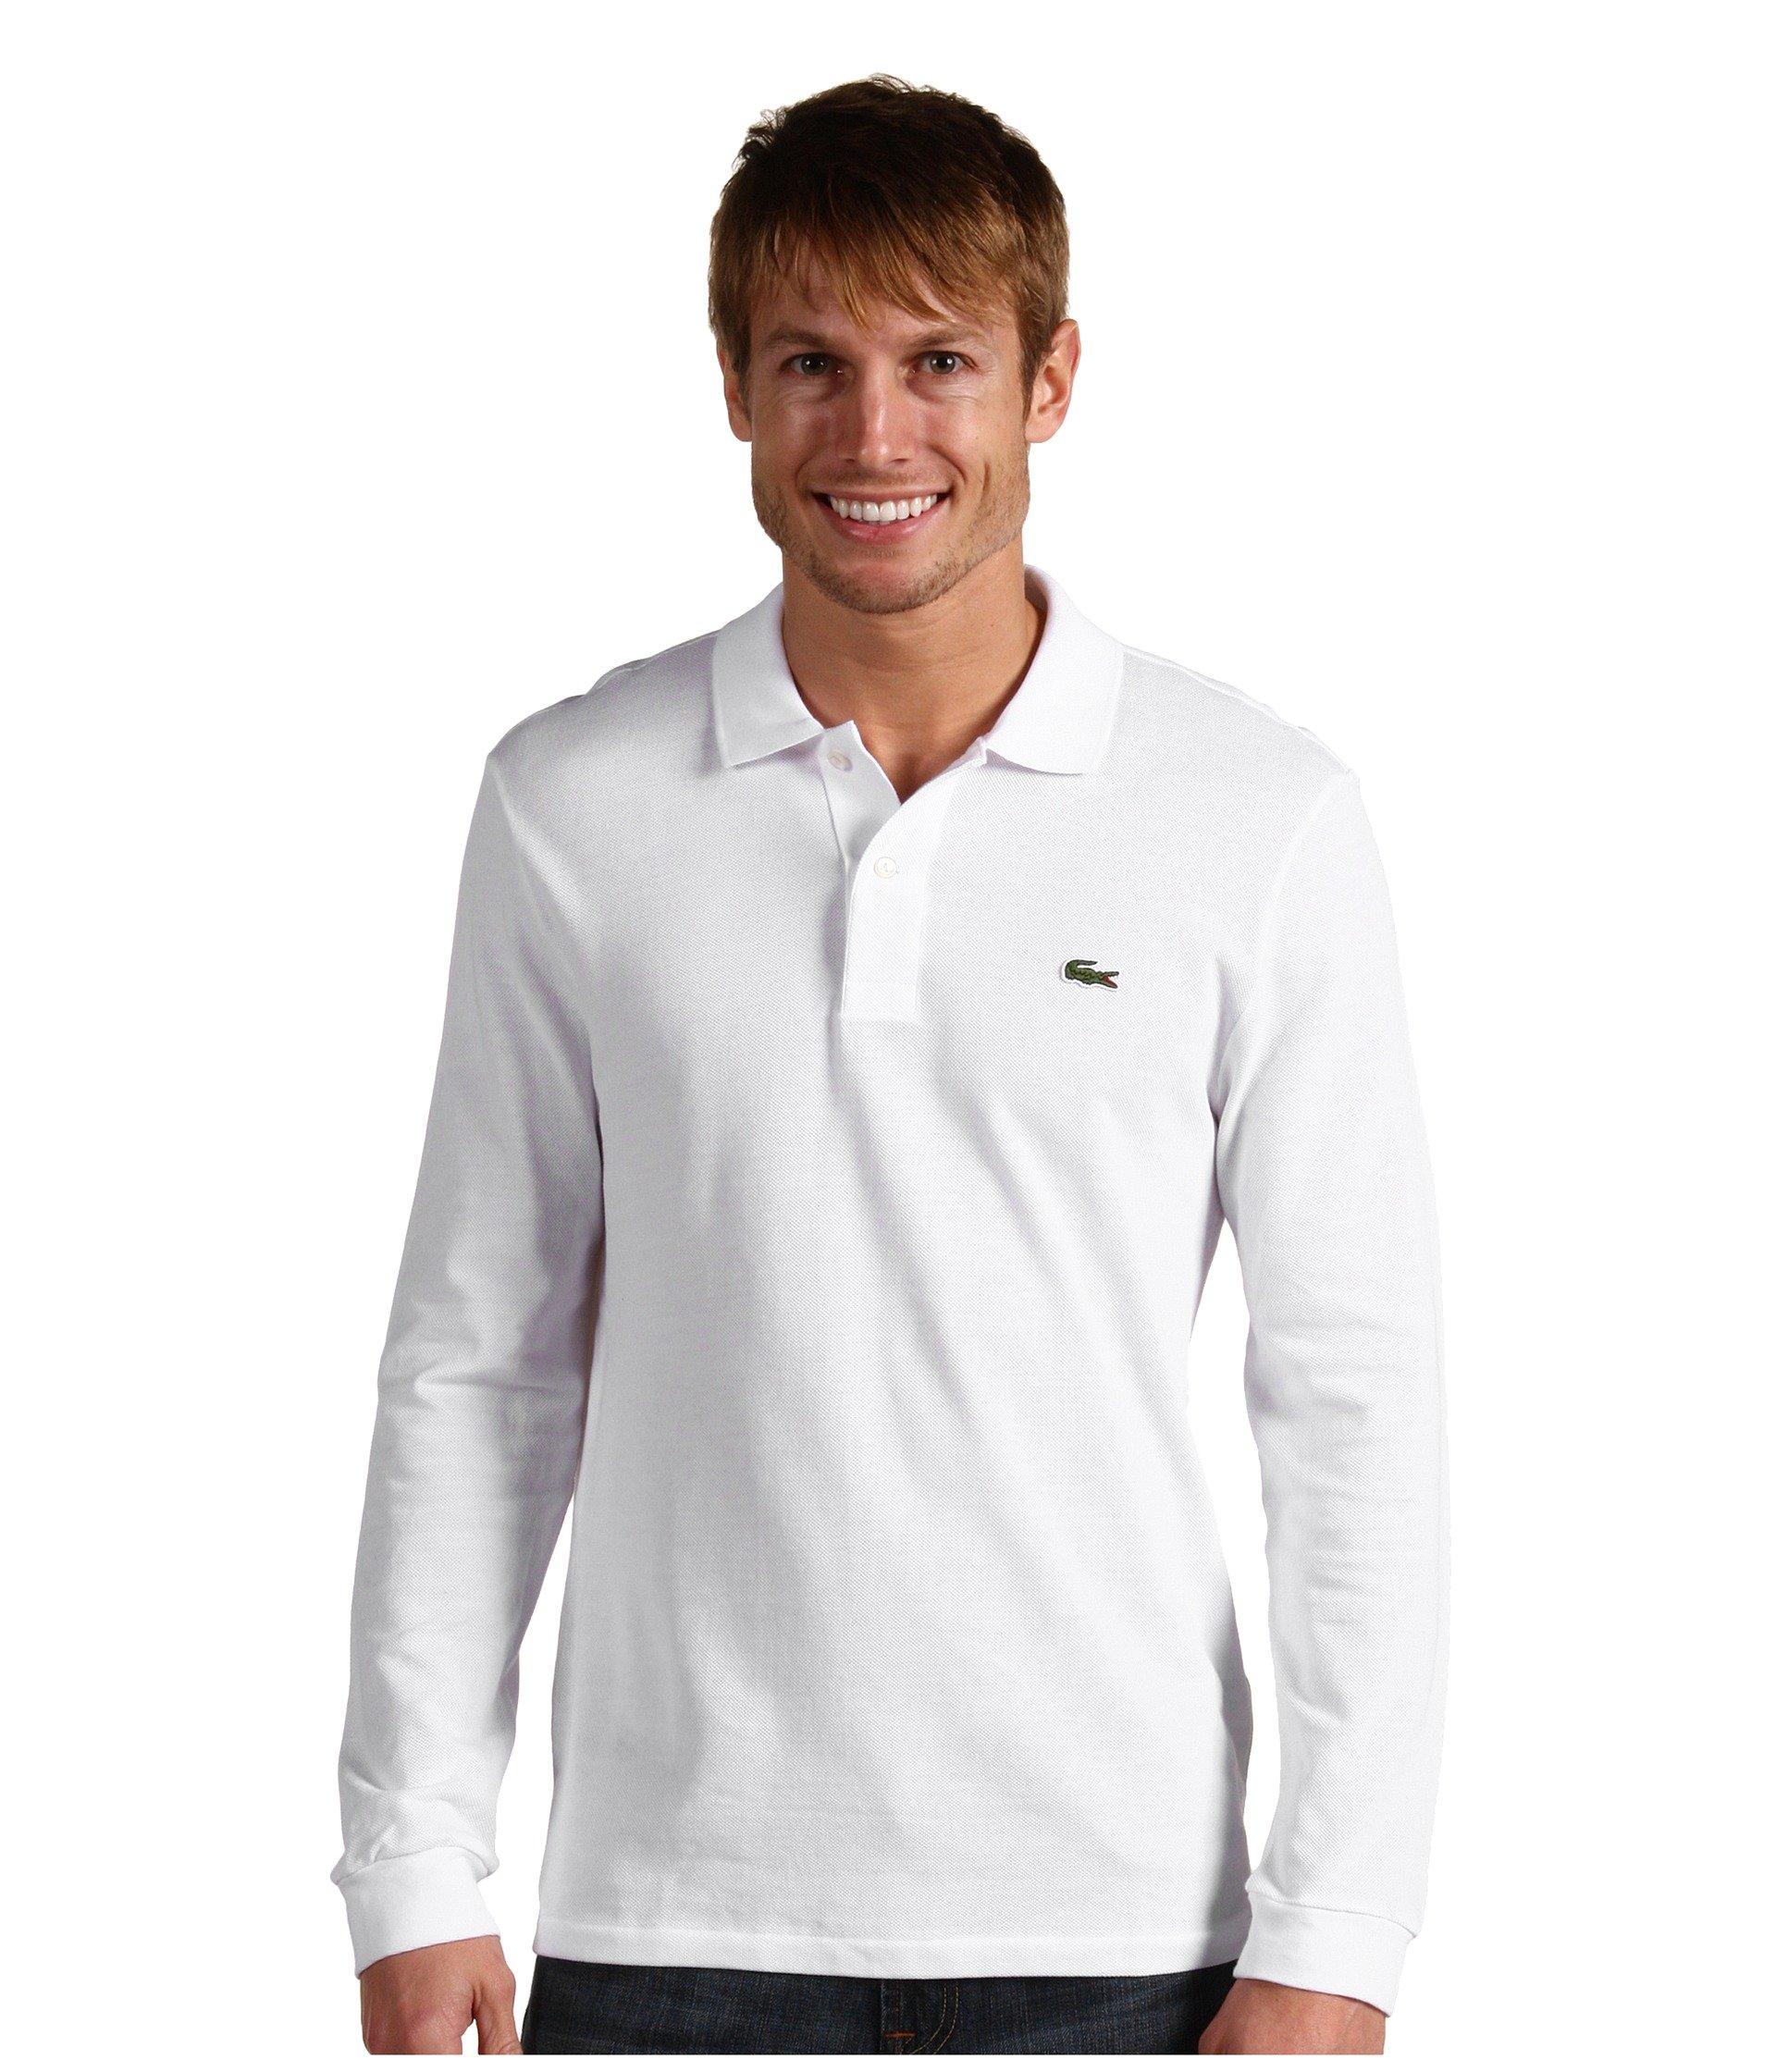 Lacoste Cotton Long Sleeve Classic Pique Polo Shirt in Bordeaux for Men - Save 25% - Lyst